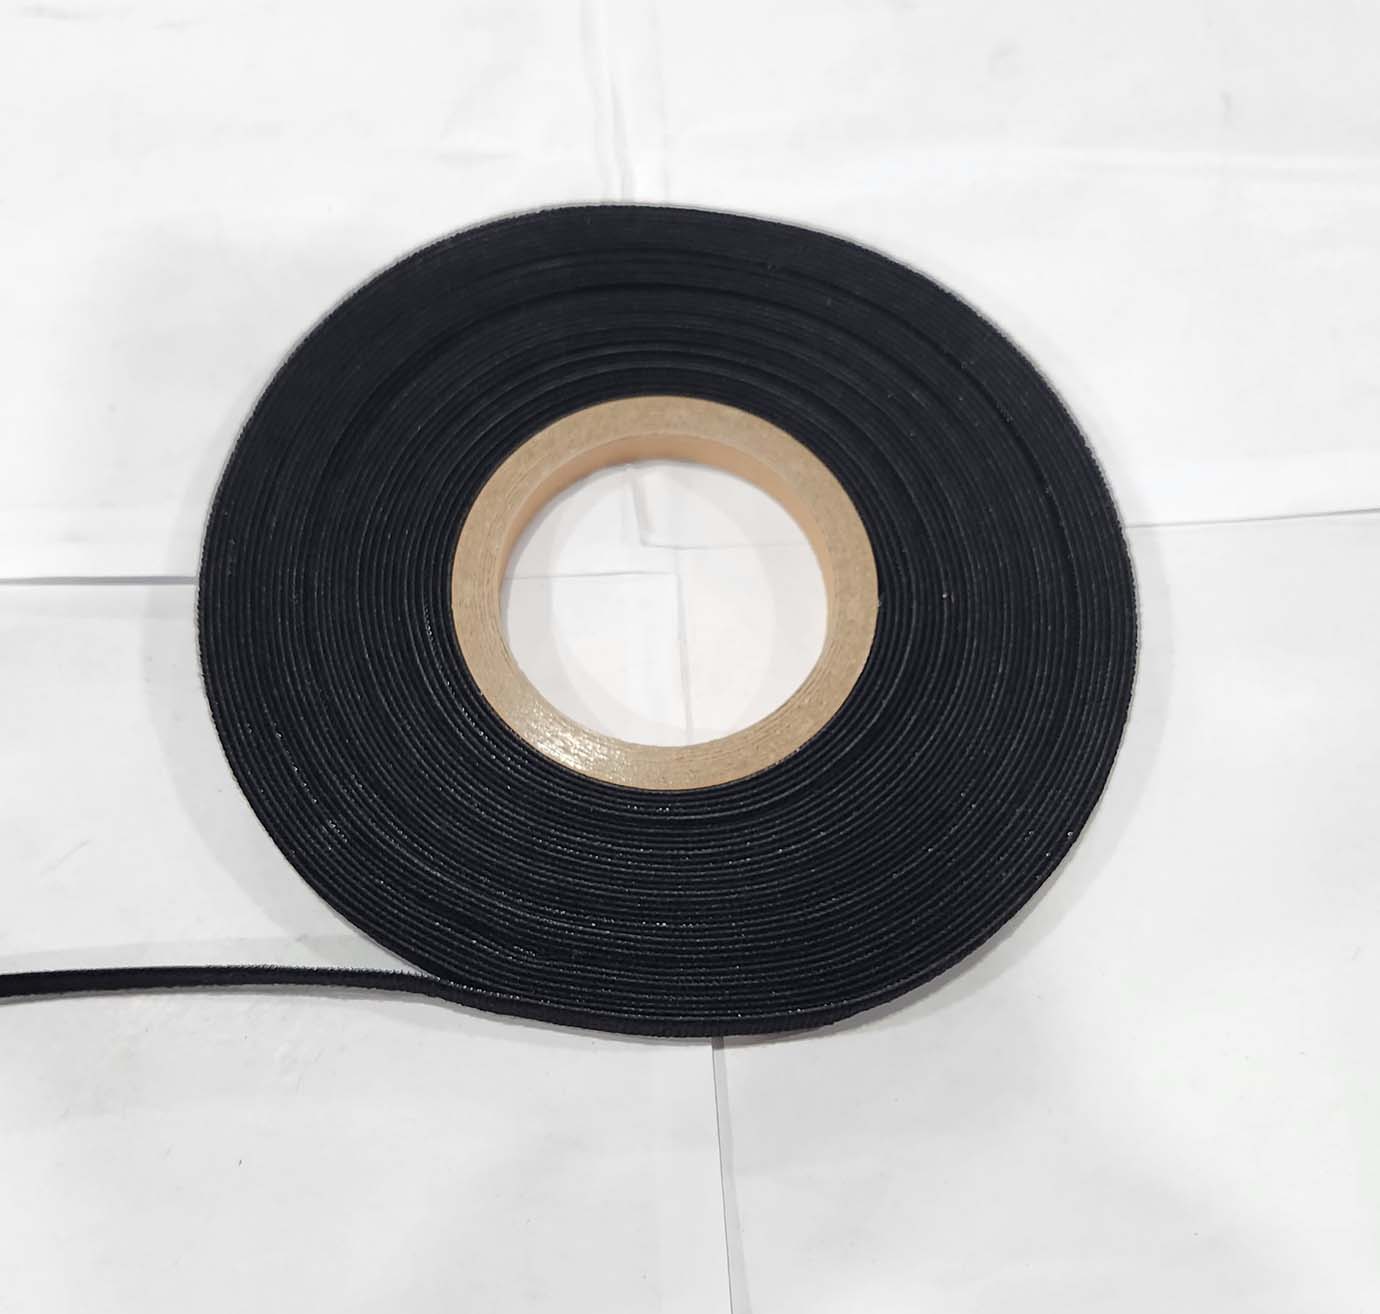 Velcro One Wrap per metre